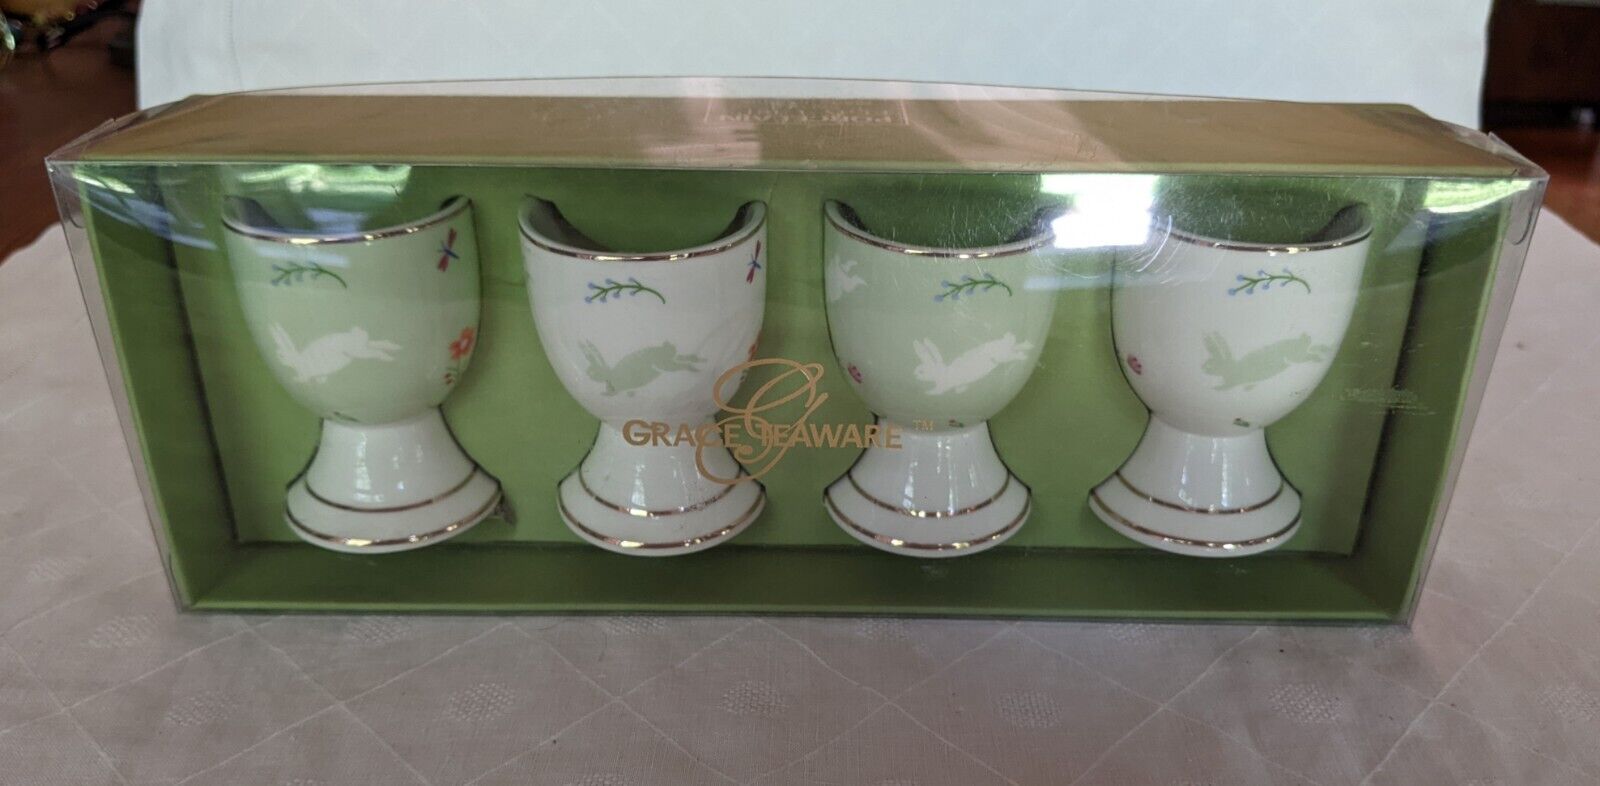 Grace Teaware Bunny Rabbit Ceramic Egg Cups, White, Mint Green, Set of 4 New